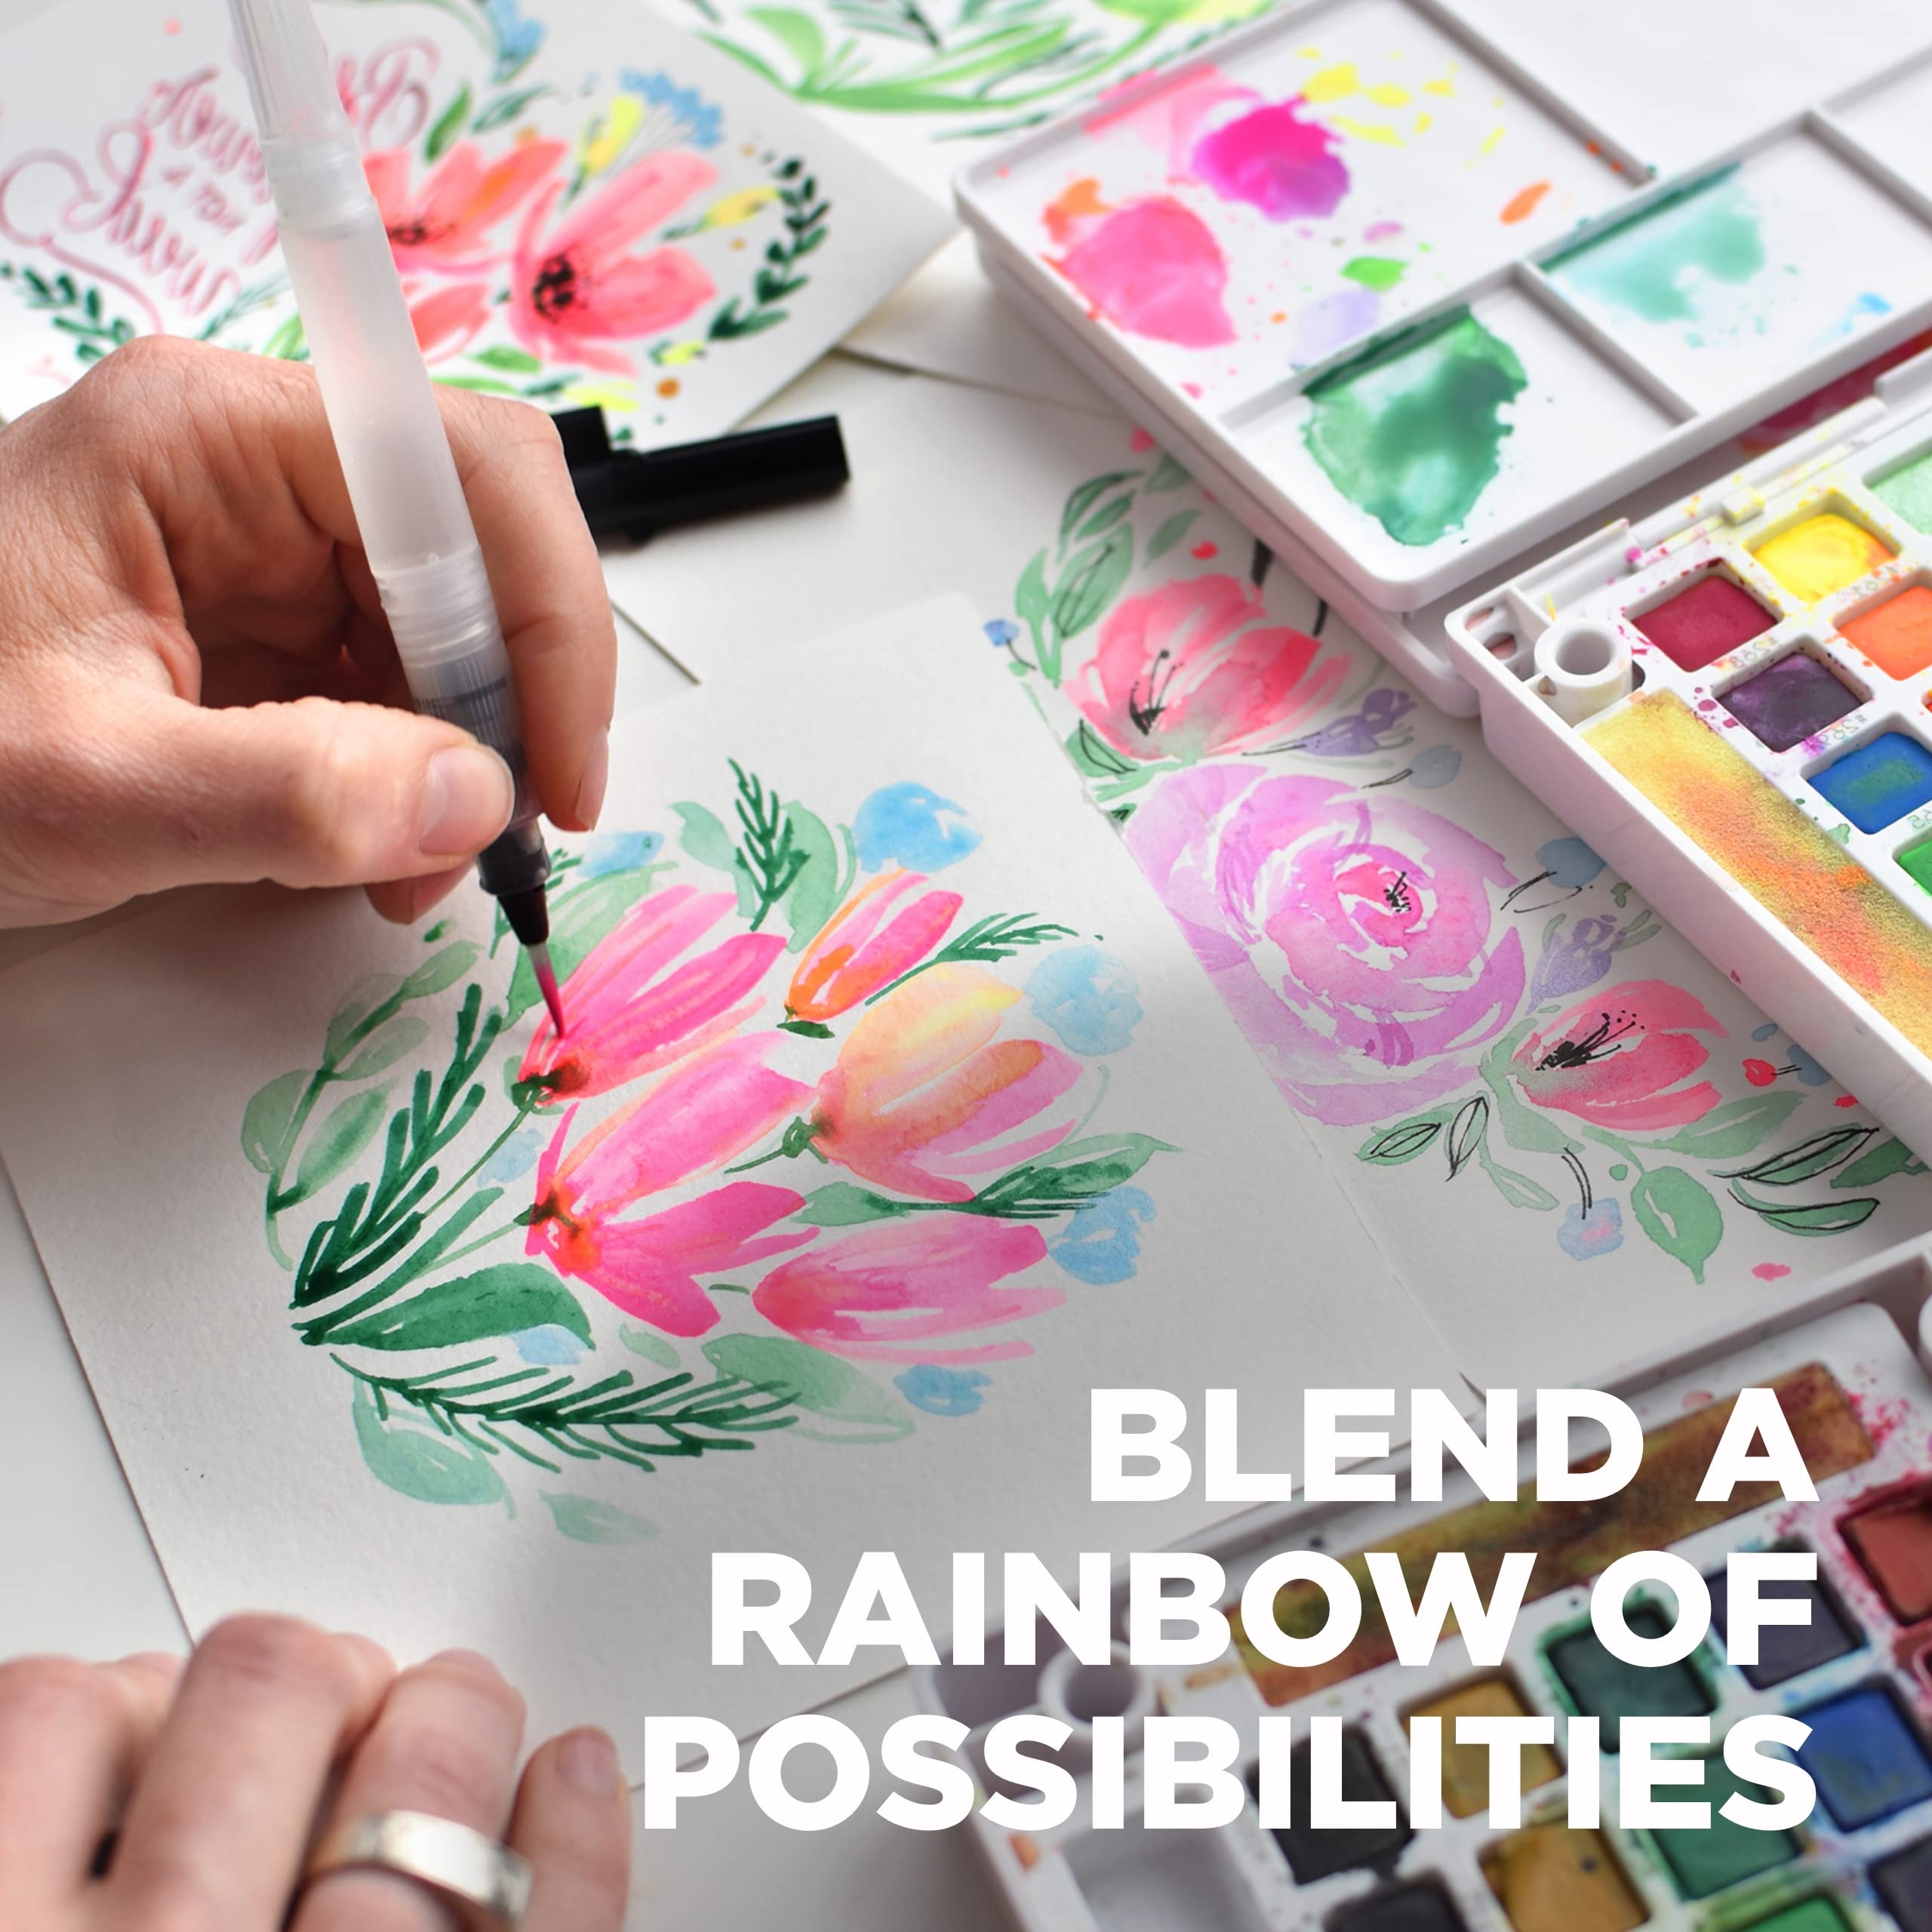 Sakura Koi Pocket Field Sketch Kit - Watercolor Sets for Painting On the Go - 24 Colors - 1 Water Brush - 1 Sponge - 1 Mixing Palette